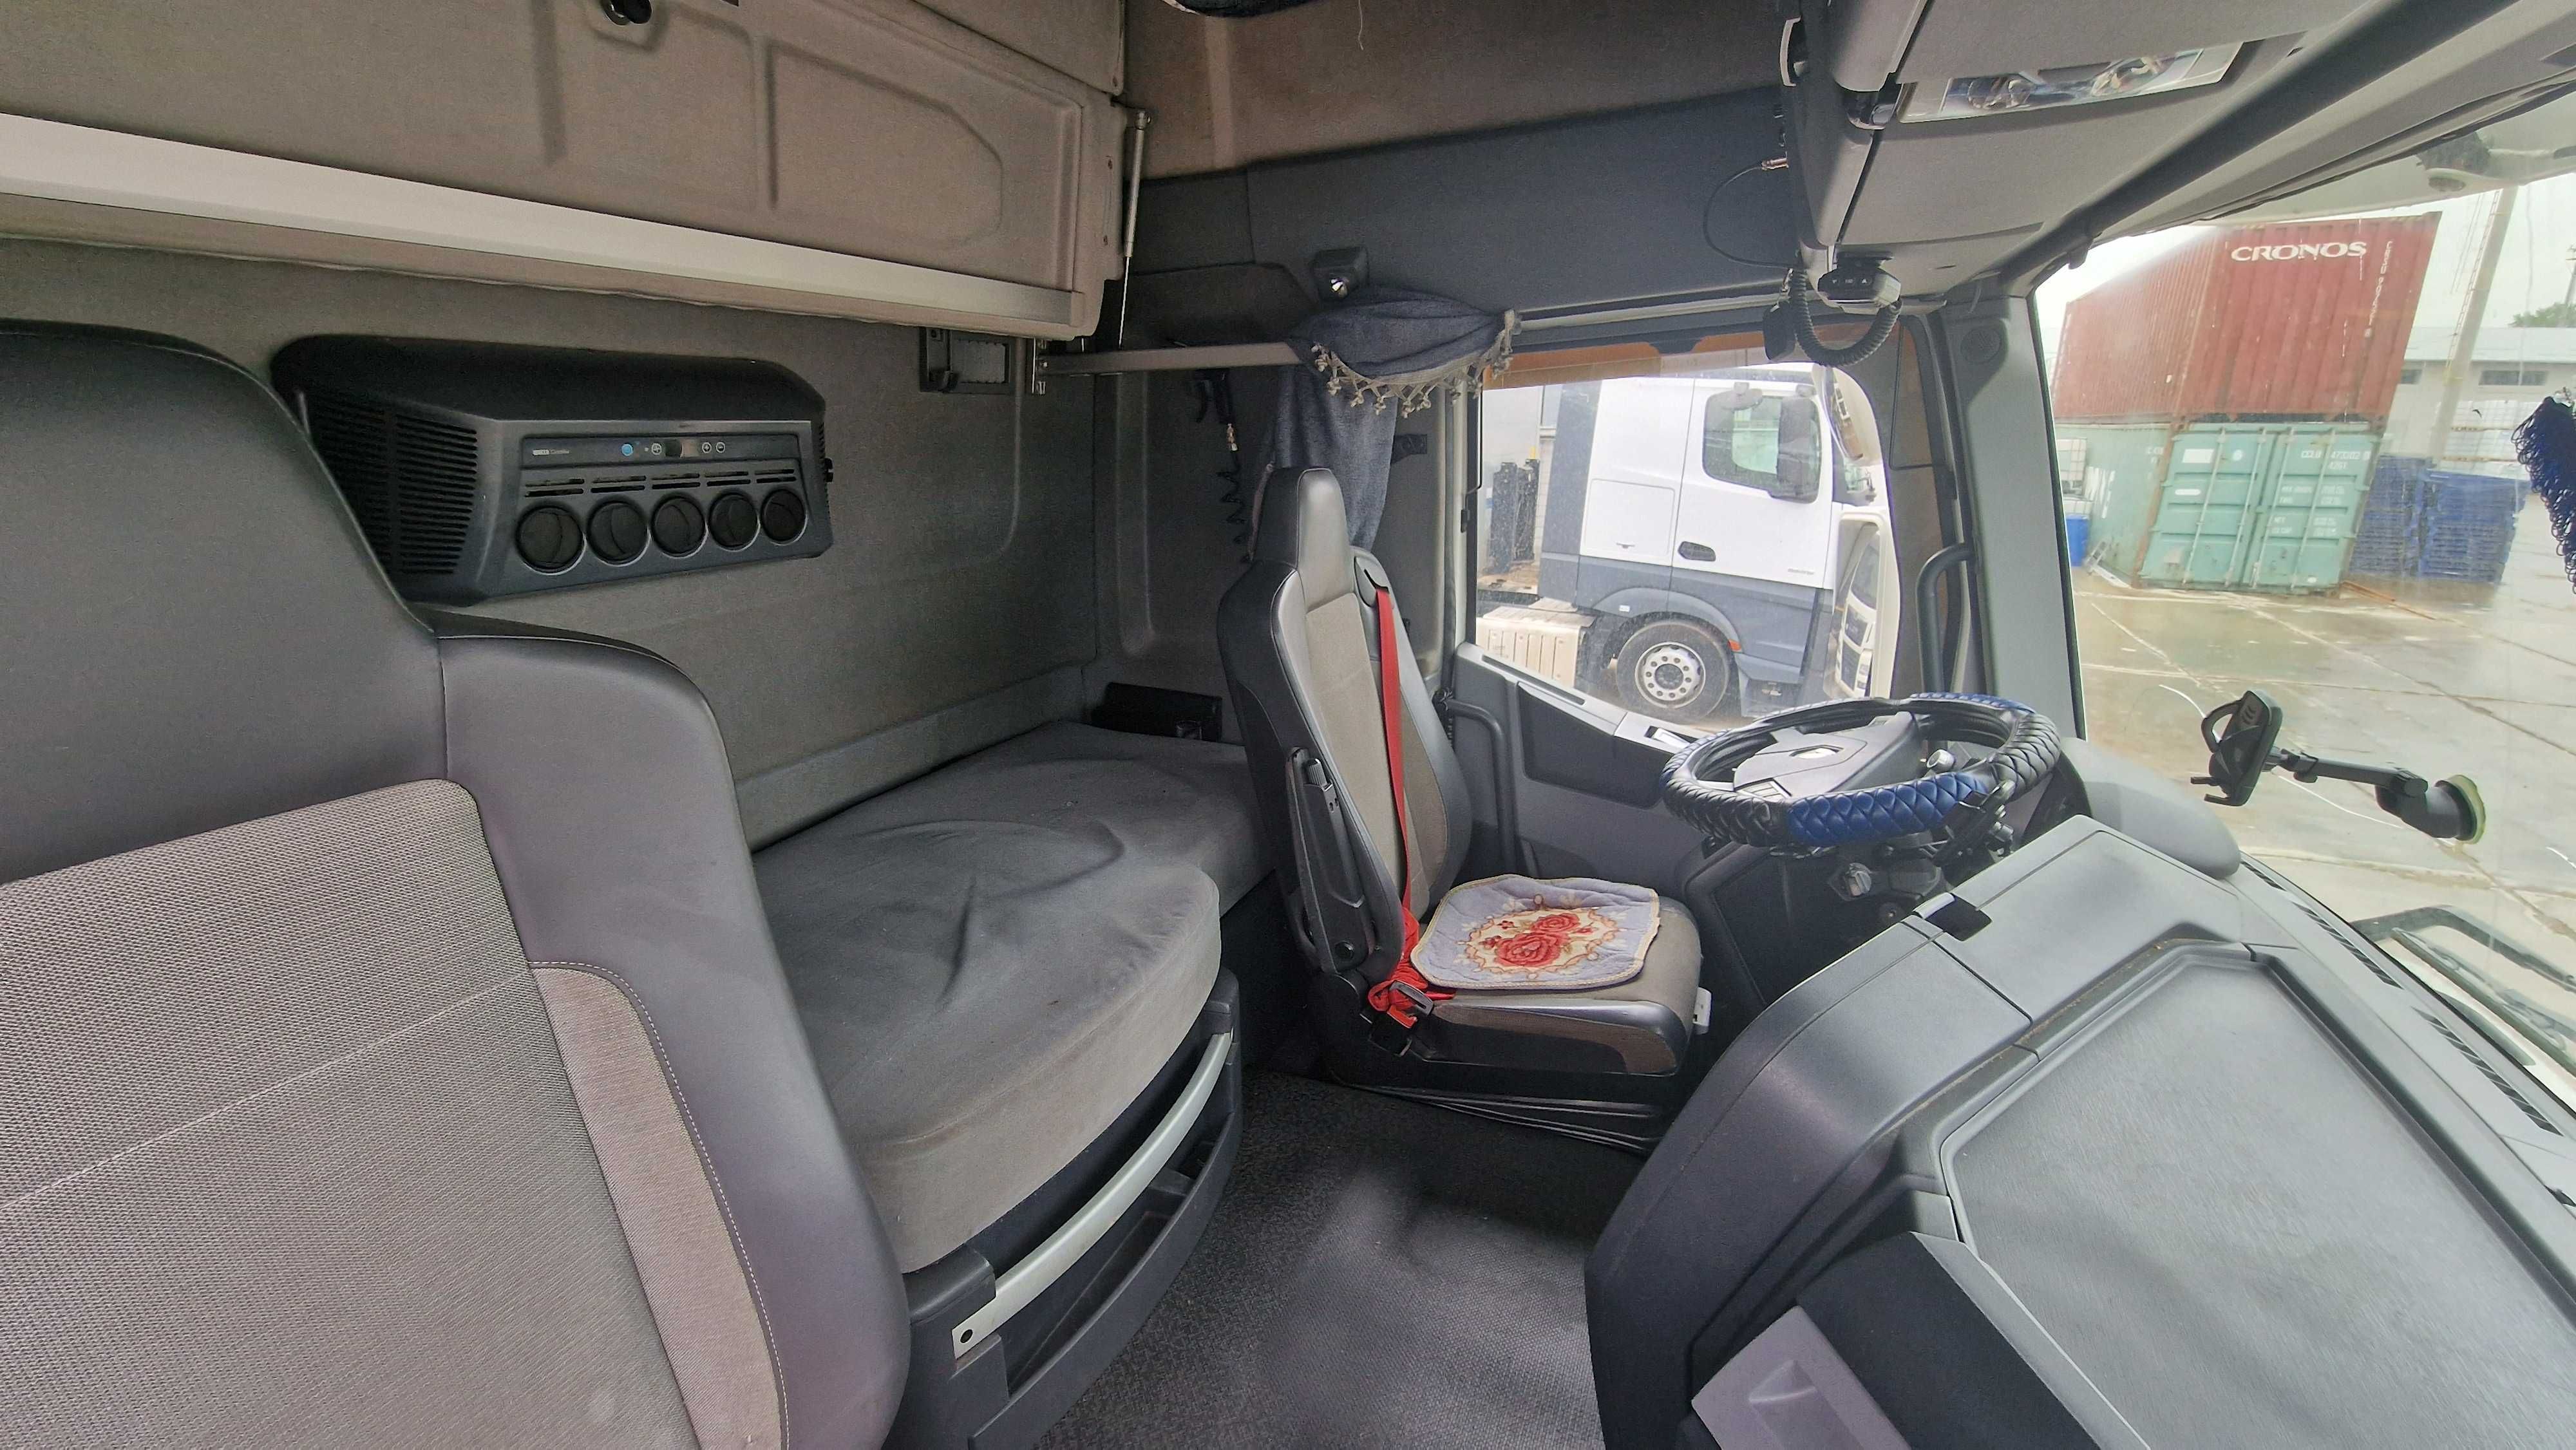 Вариантга Тягач Reno, Т-460, Евро-6, 2015г.вып. Volvo мотор+коробка